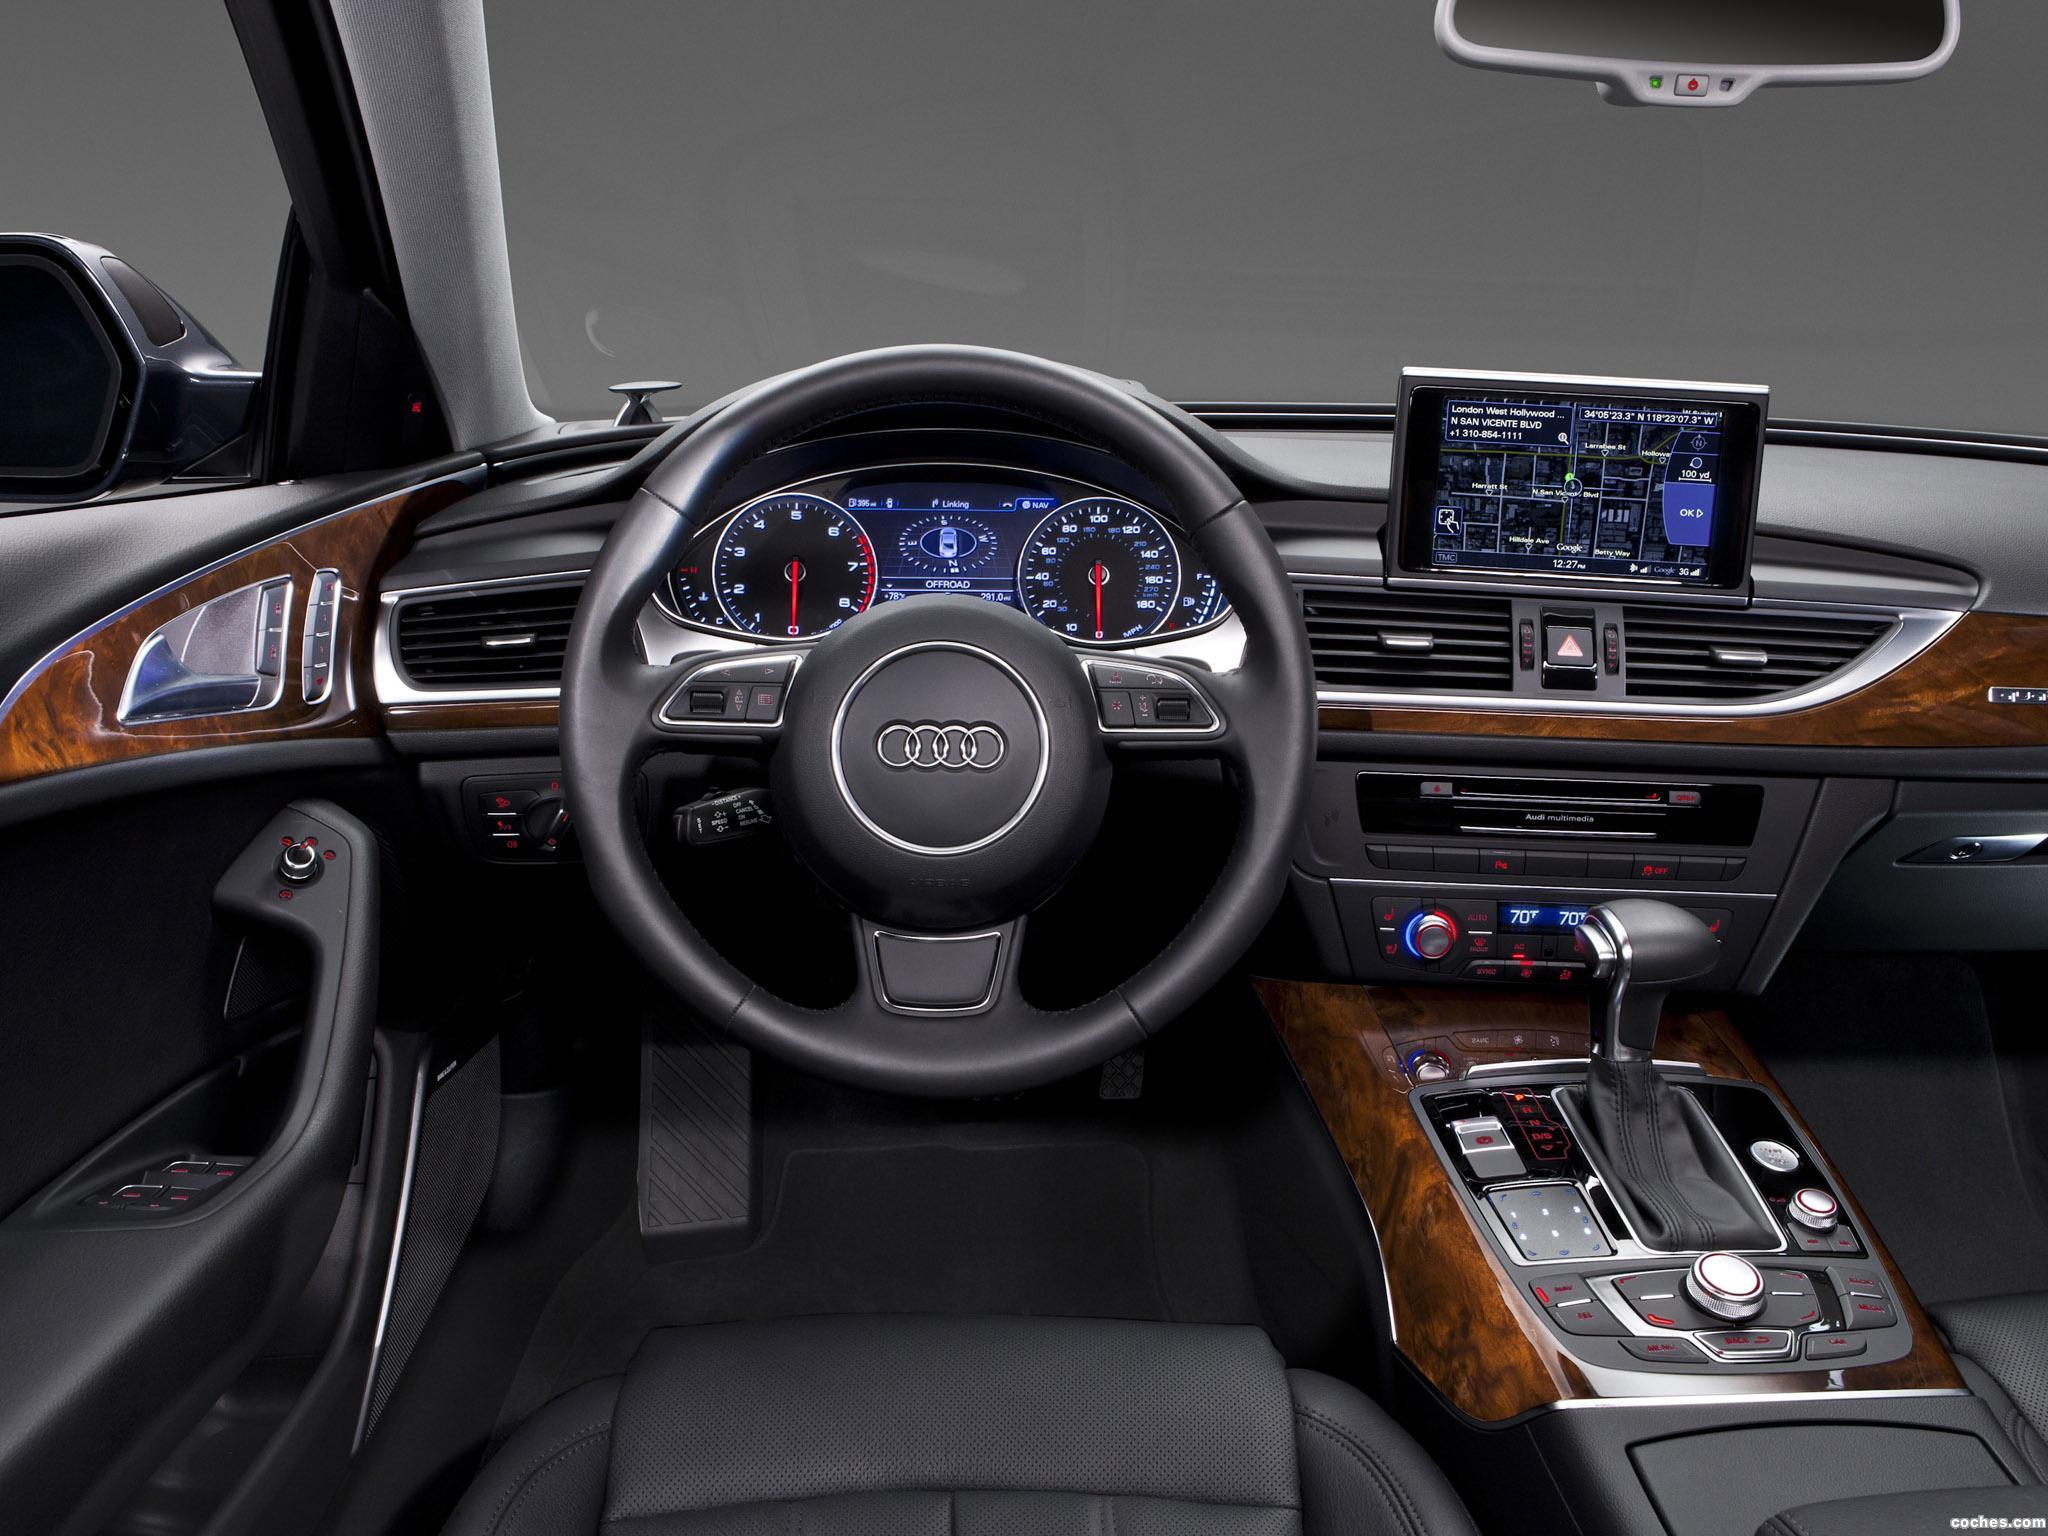 Особенности комплектации Audi А6 С7 фото